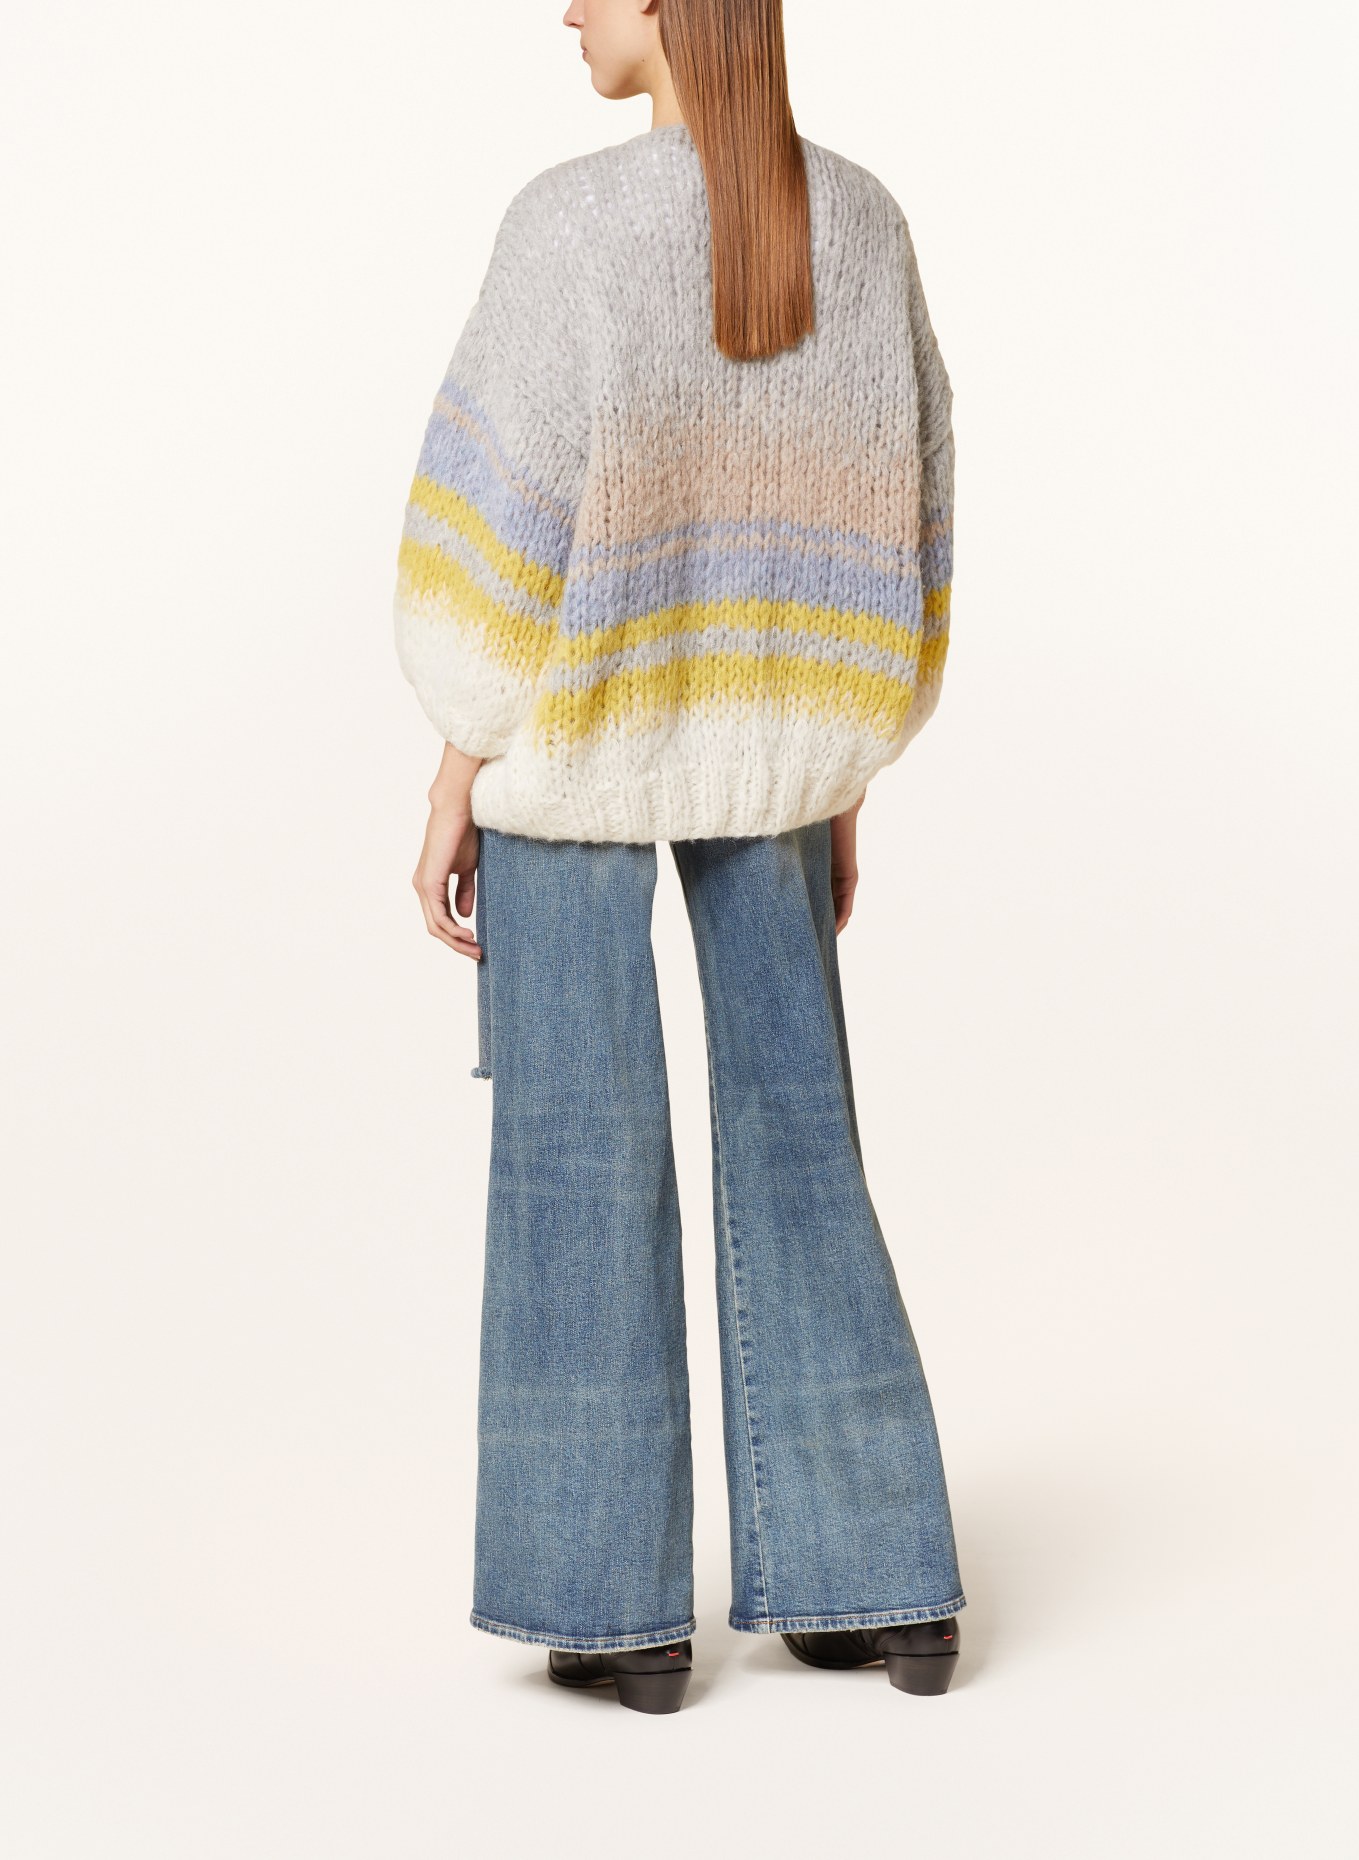 MAIAMI Knit cardigan made of alpaca, Color: LIGHT GRAY/ YELLOW/ GRAY (Image 3)